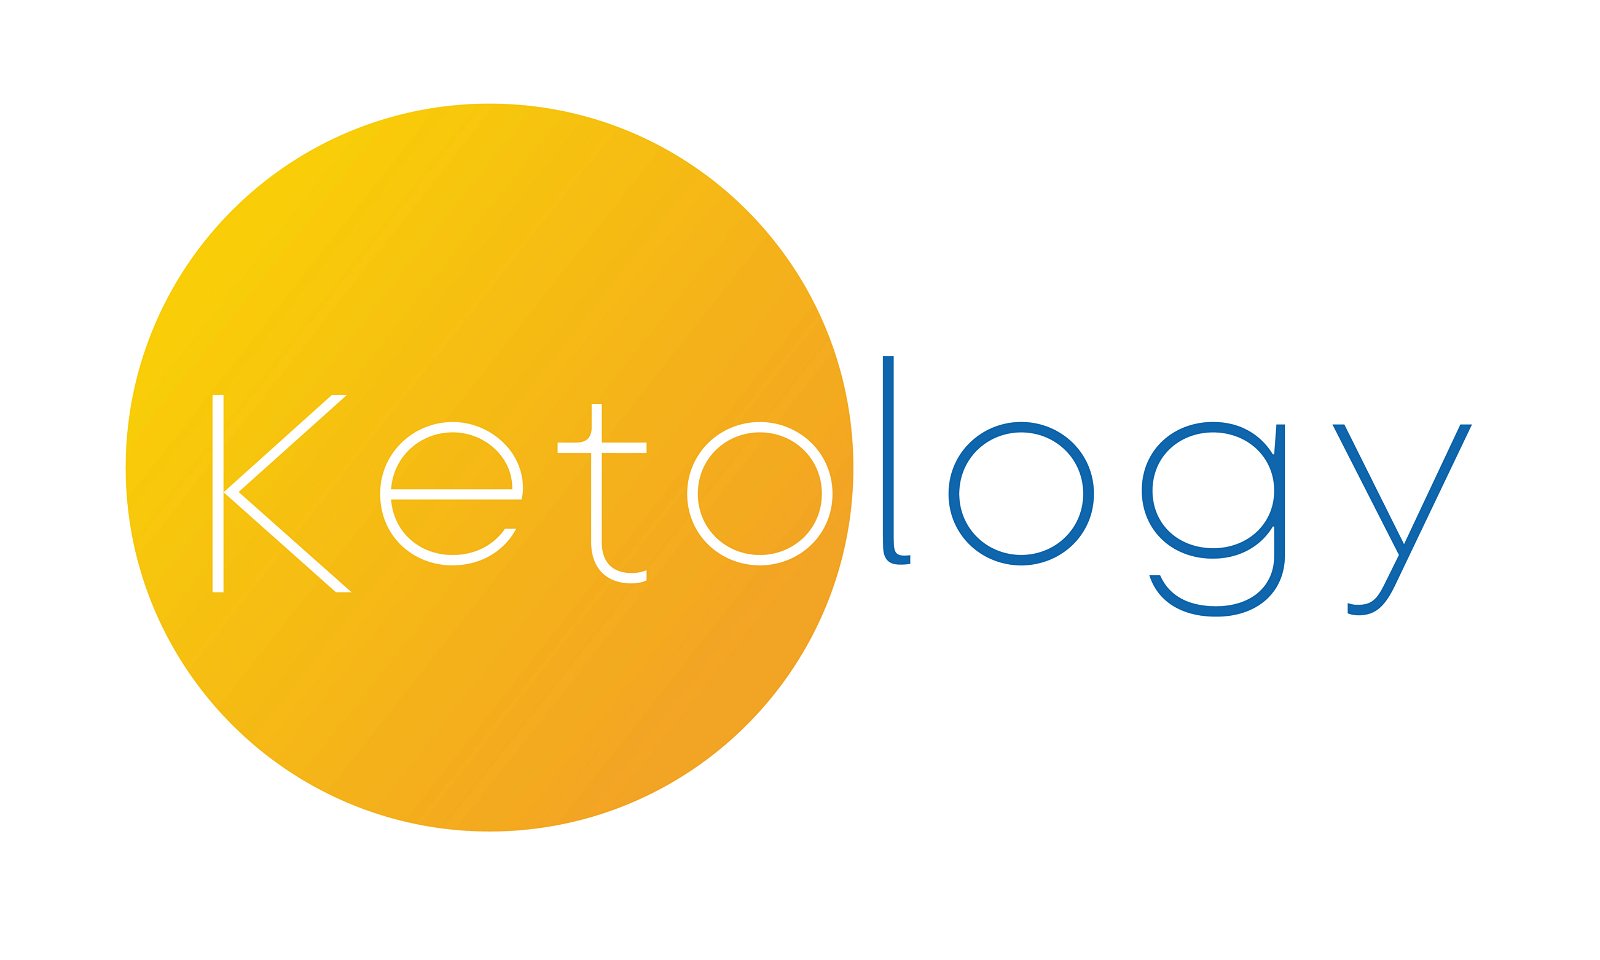 Ketology.com - Creative brandable domain for sale